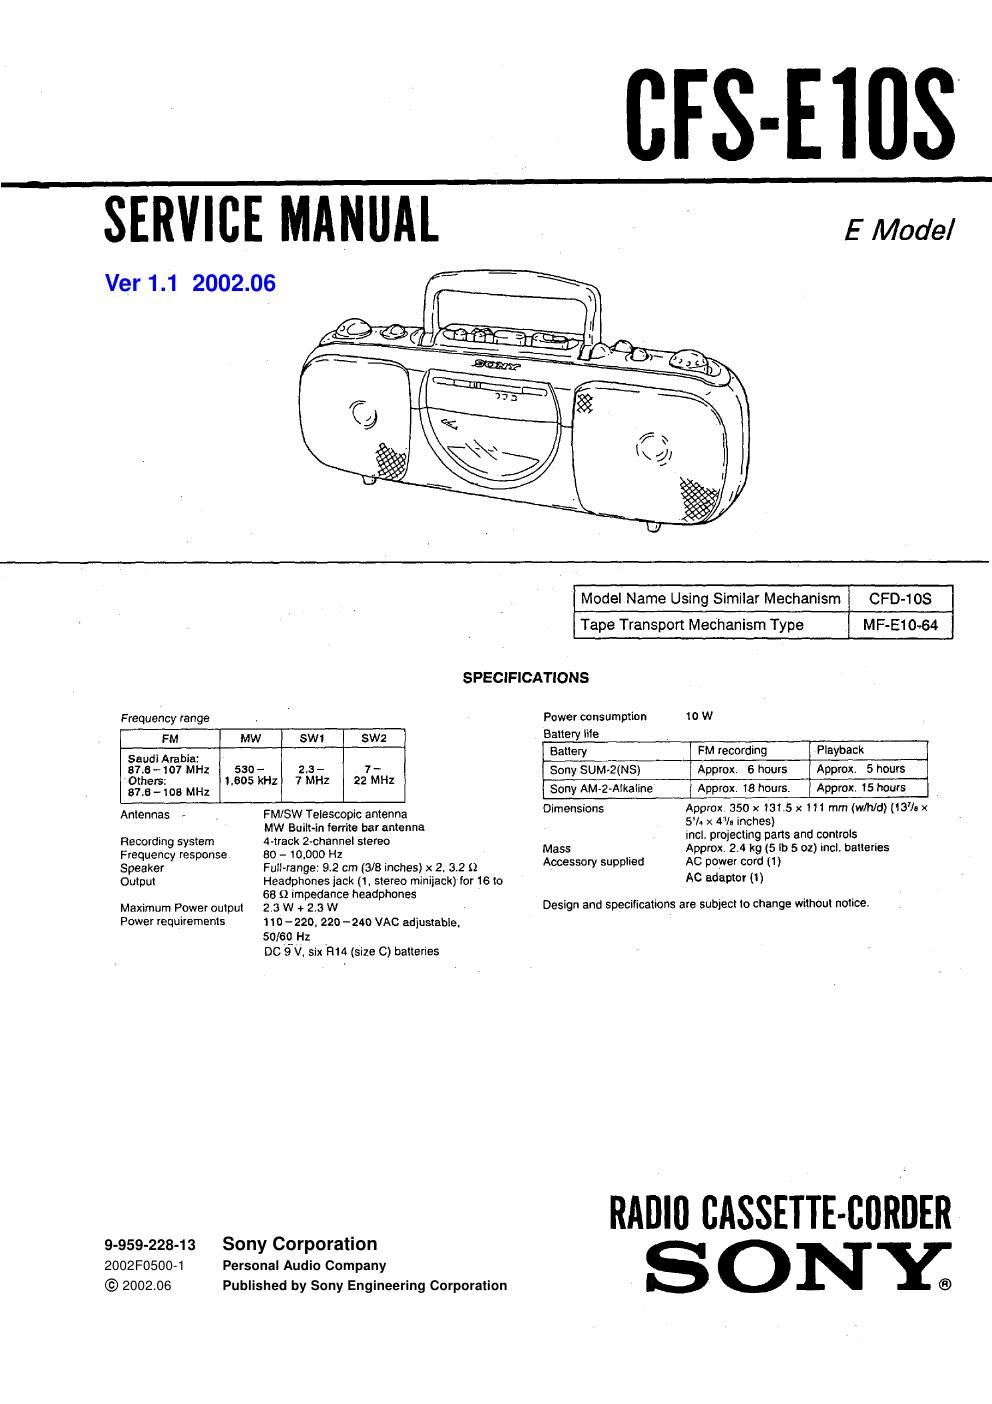 sony cfs e 10 s service manual